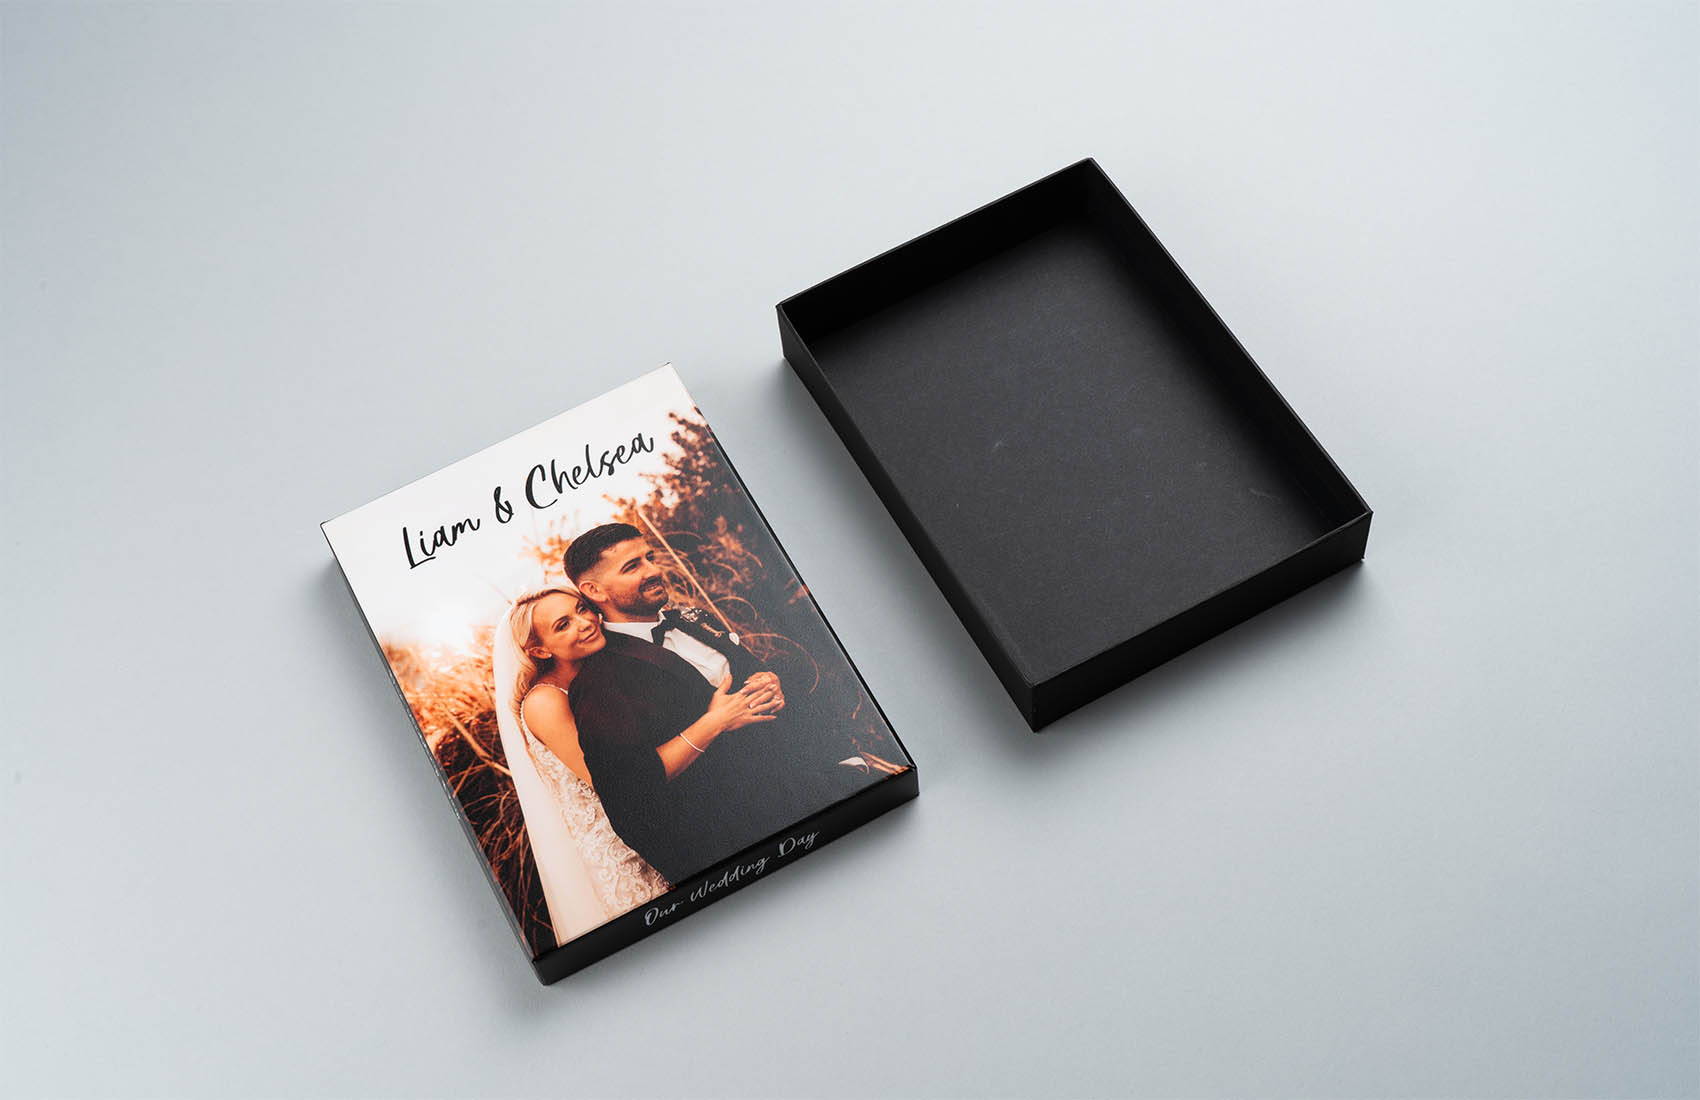 Custom Photo Print Boxes